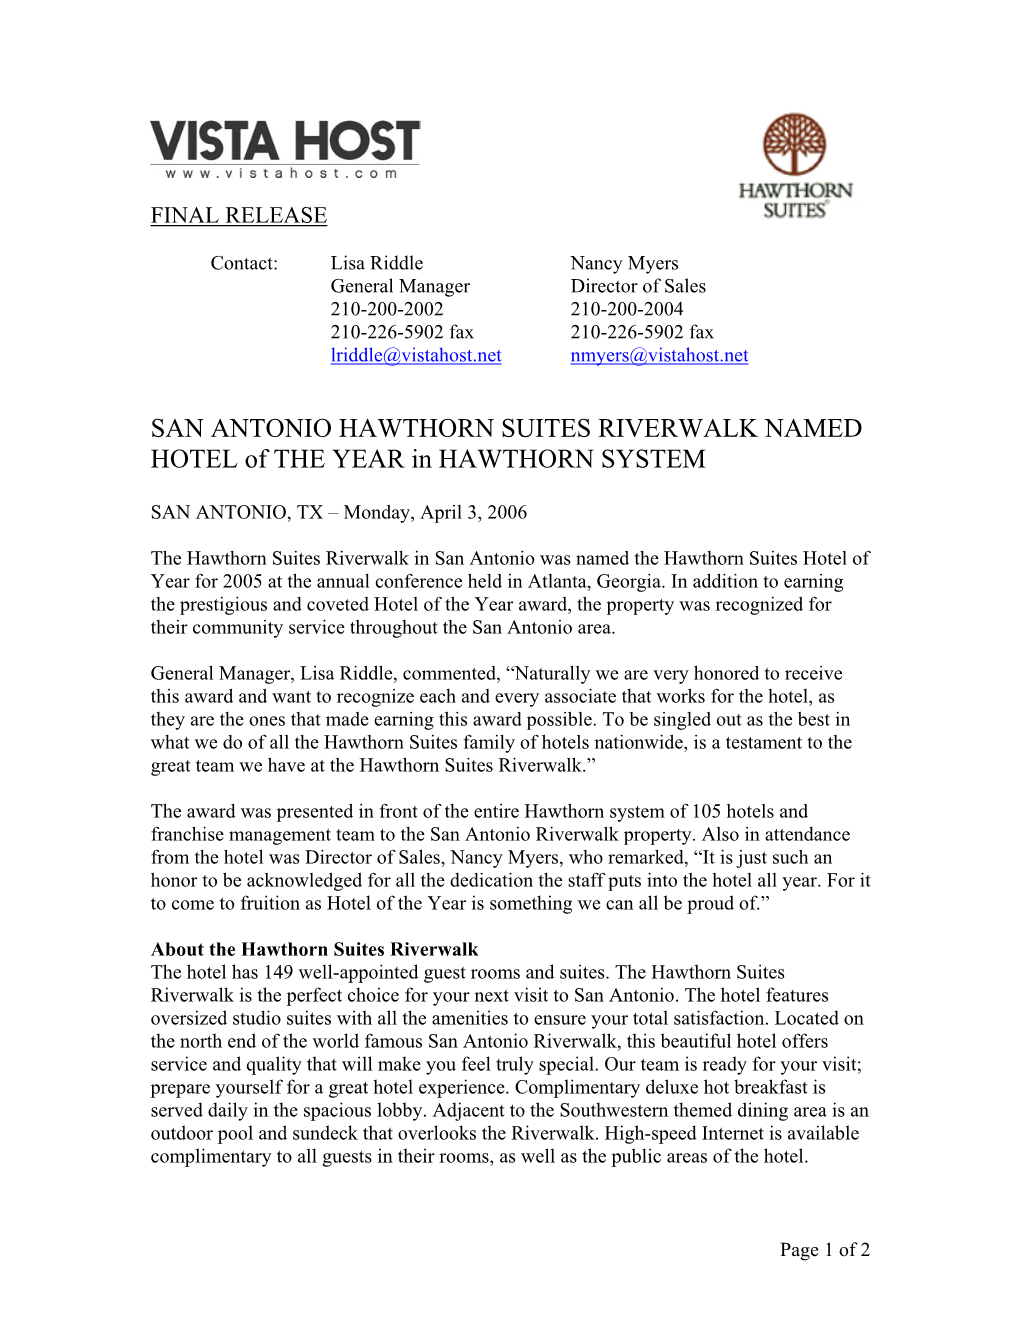 SAN ANTONIO HAWTHORN SUITES RIVERWALK NAMED HOTEL of the YEAR in HAWTHORN SYSTEM